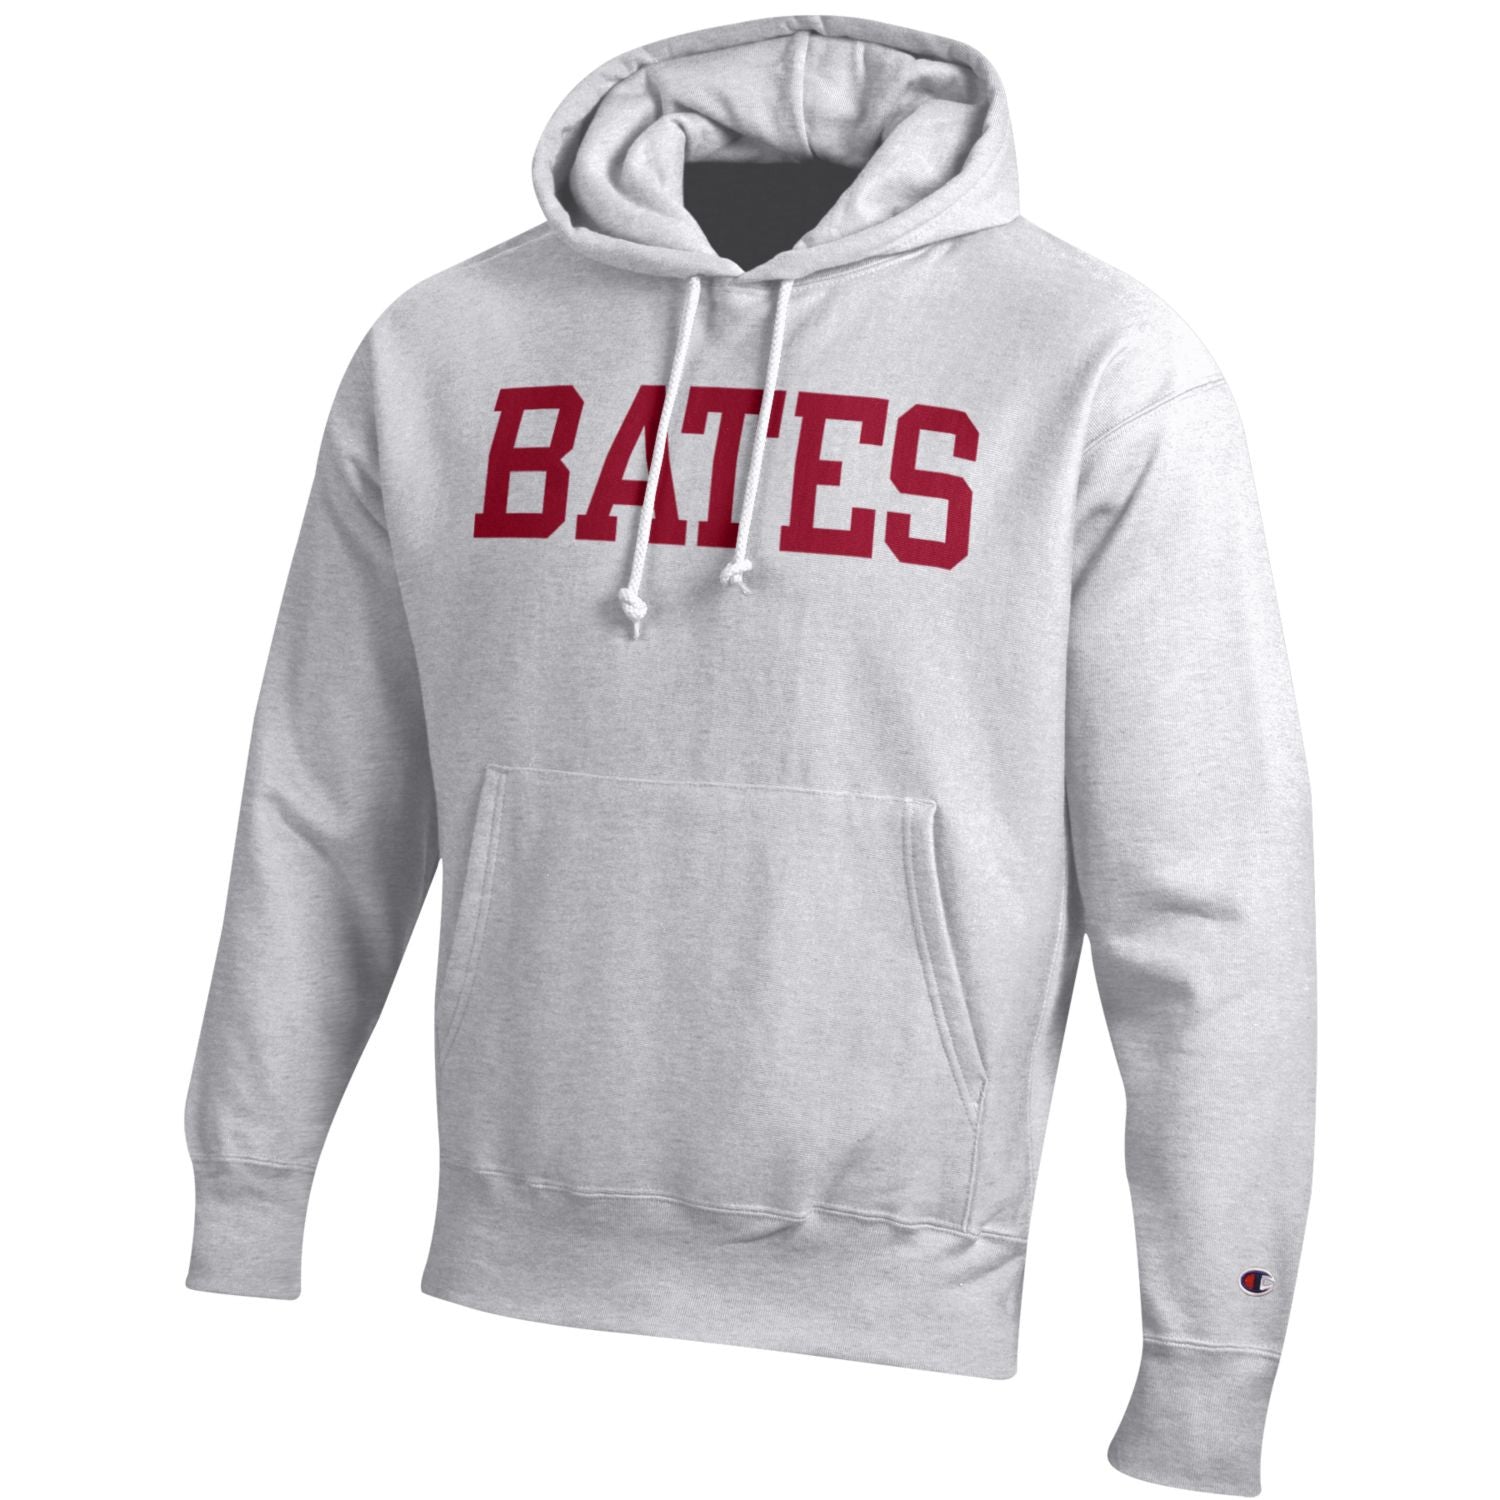 Champion Hooded Sweatshirt with BATES 